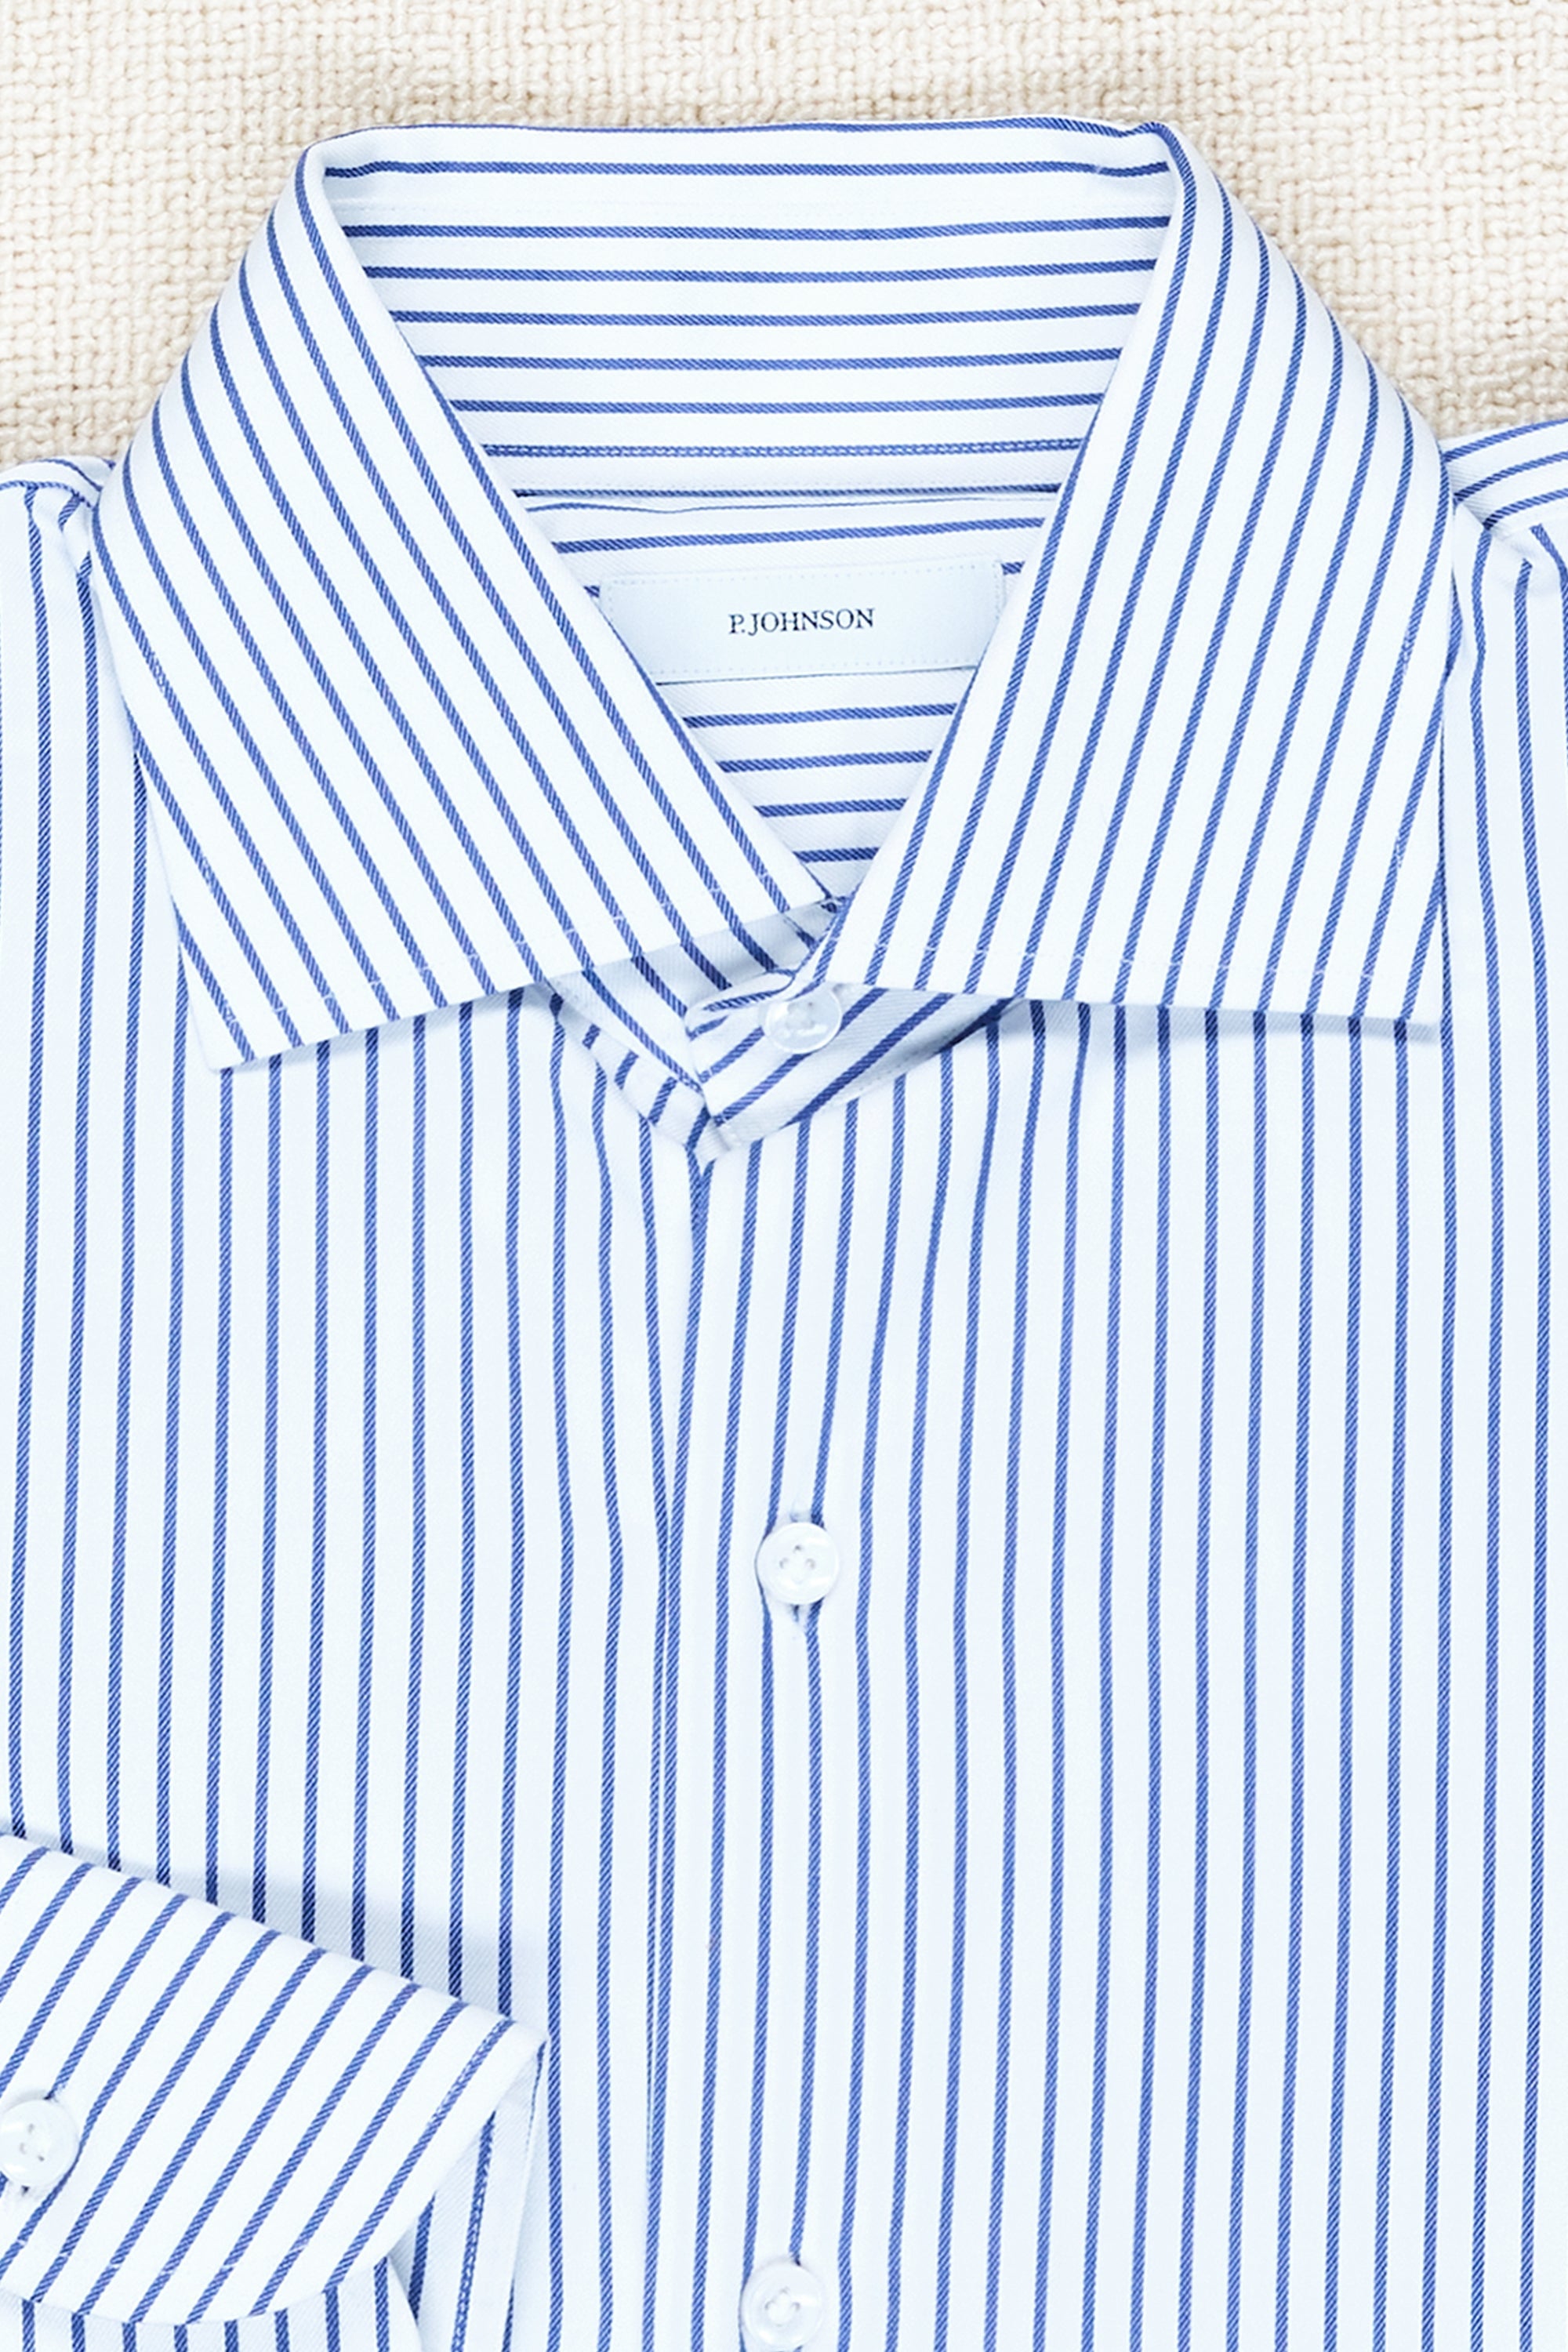 P. Johnson White with Navy Narrow Stripe Cotton Twill Spread Collar Shirt